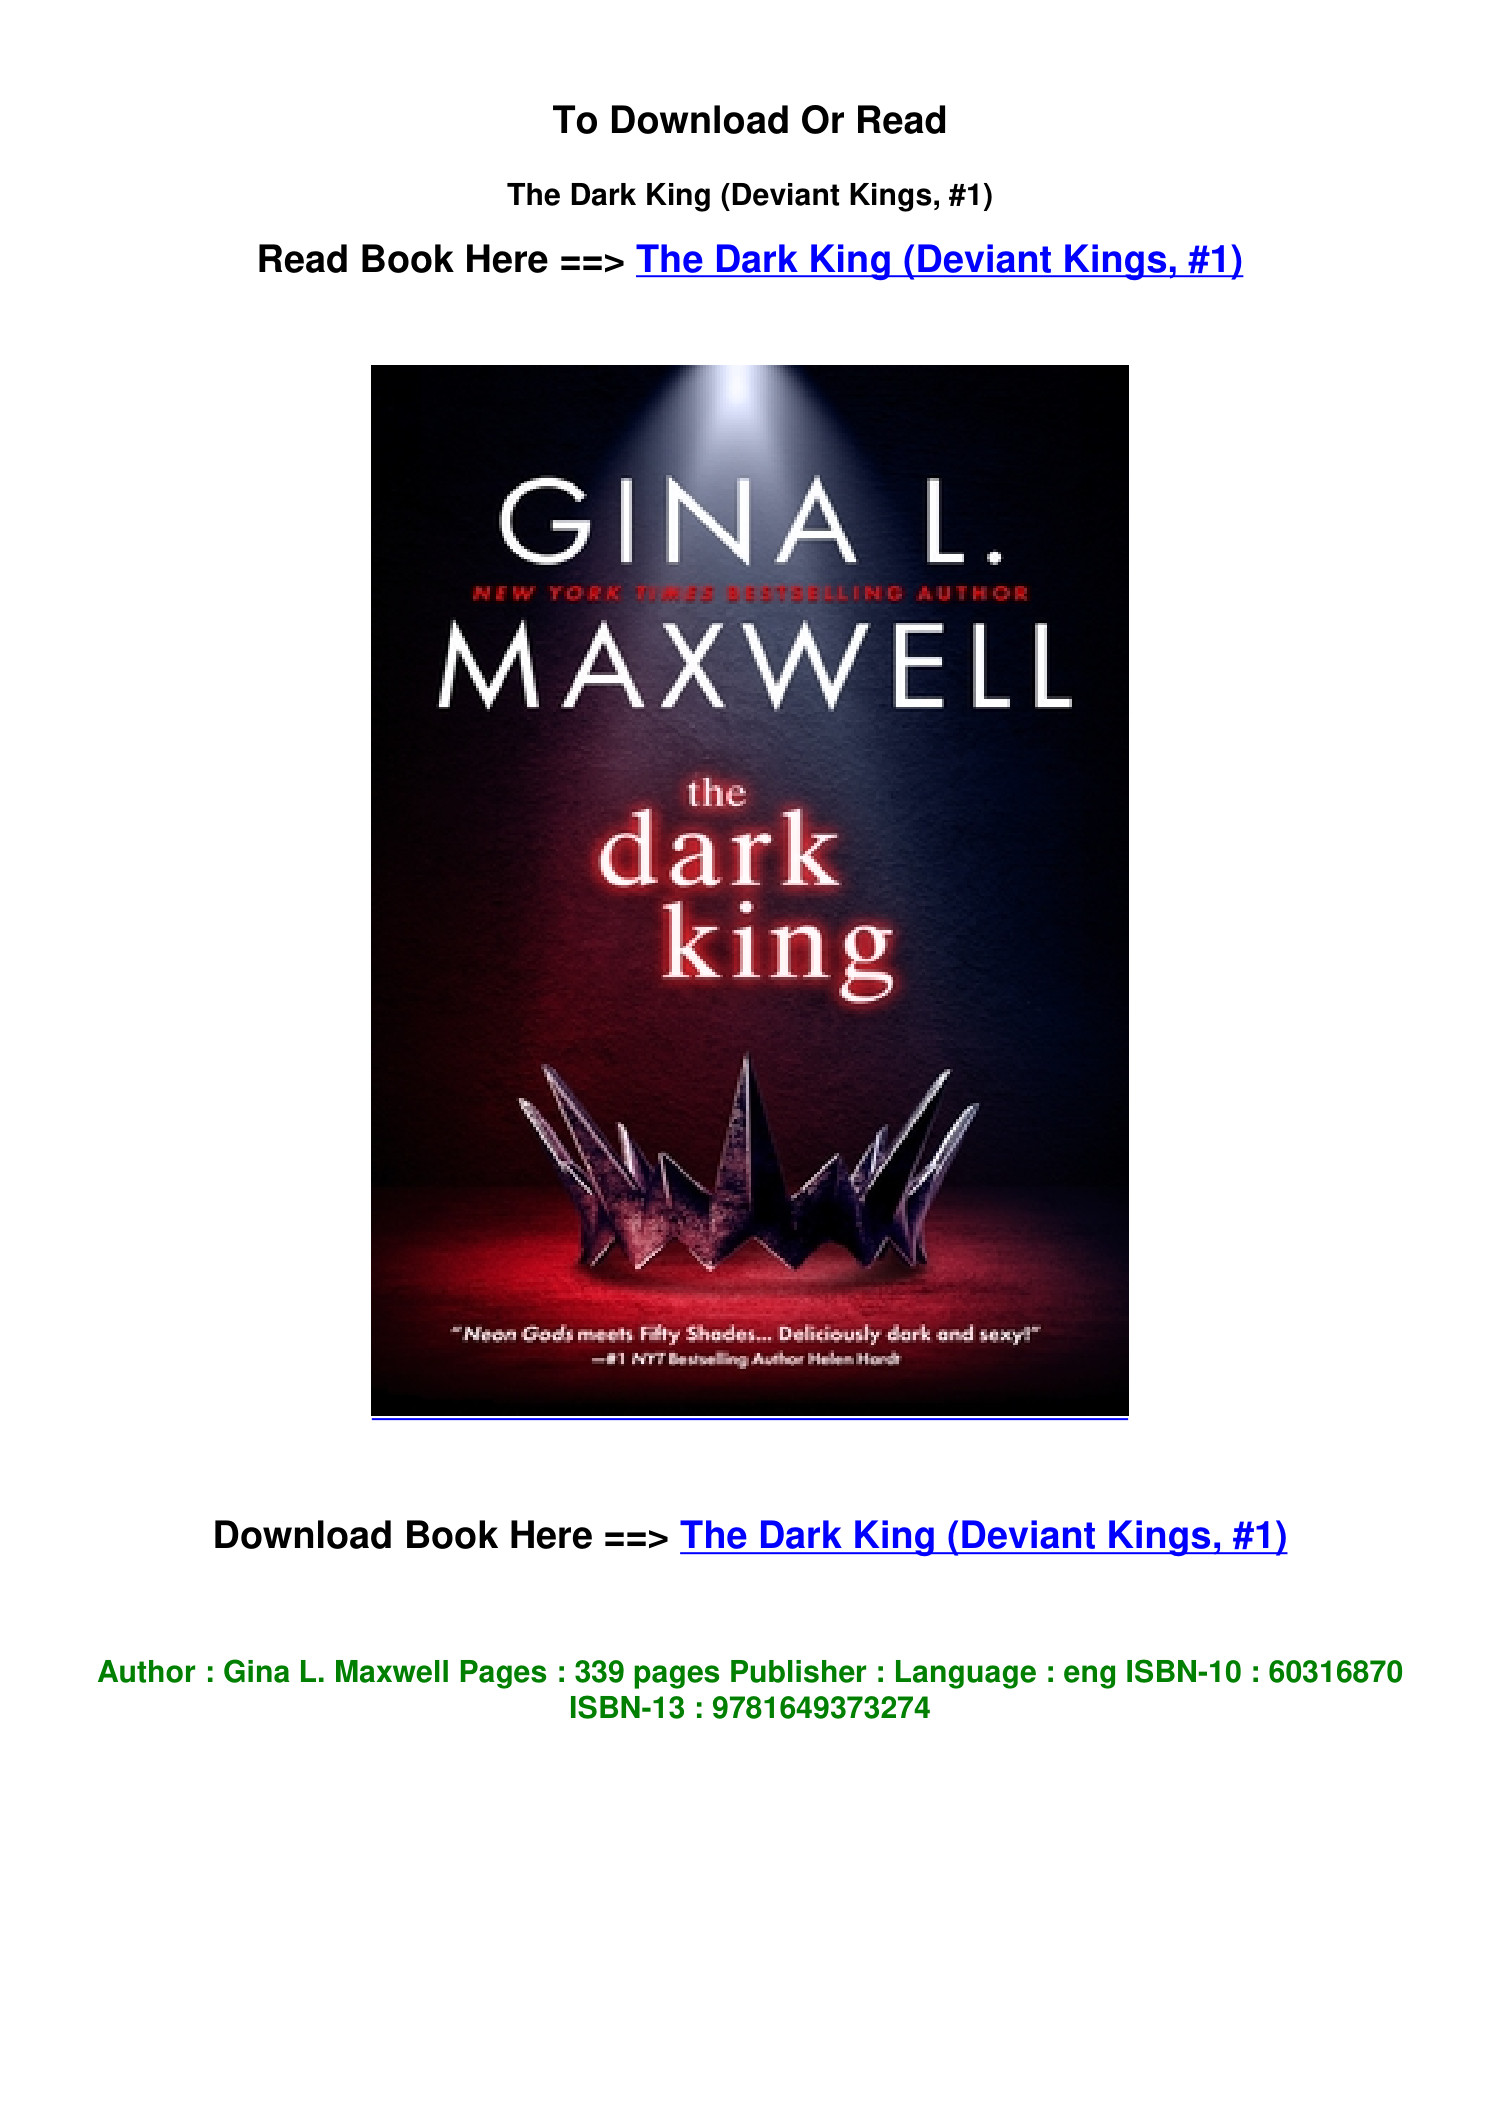 download Pdf The Dark King Deviant Kings 1 BY Gina L Maxwell.pdf